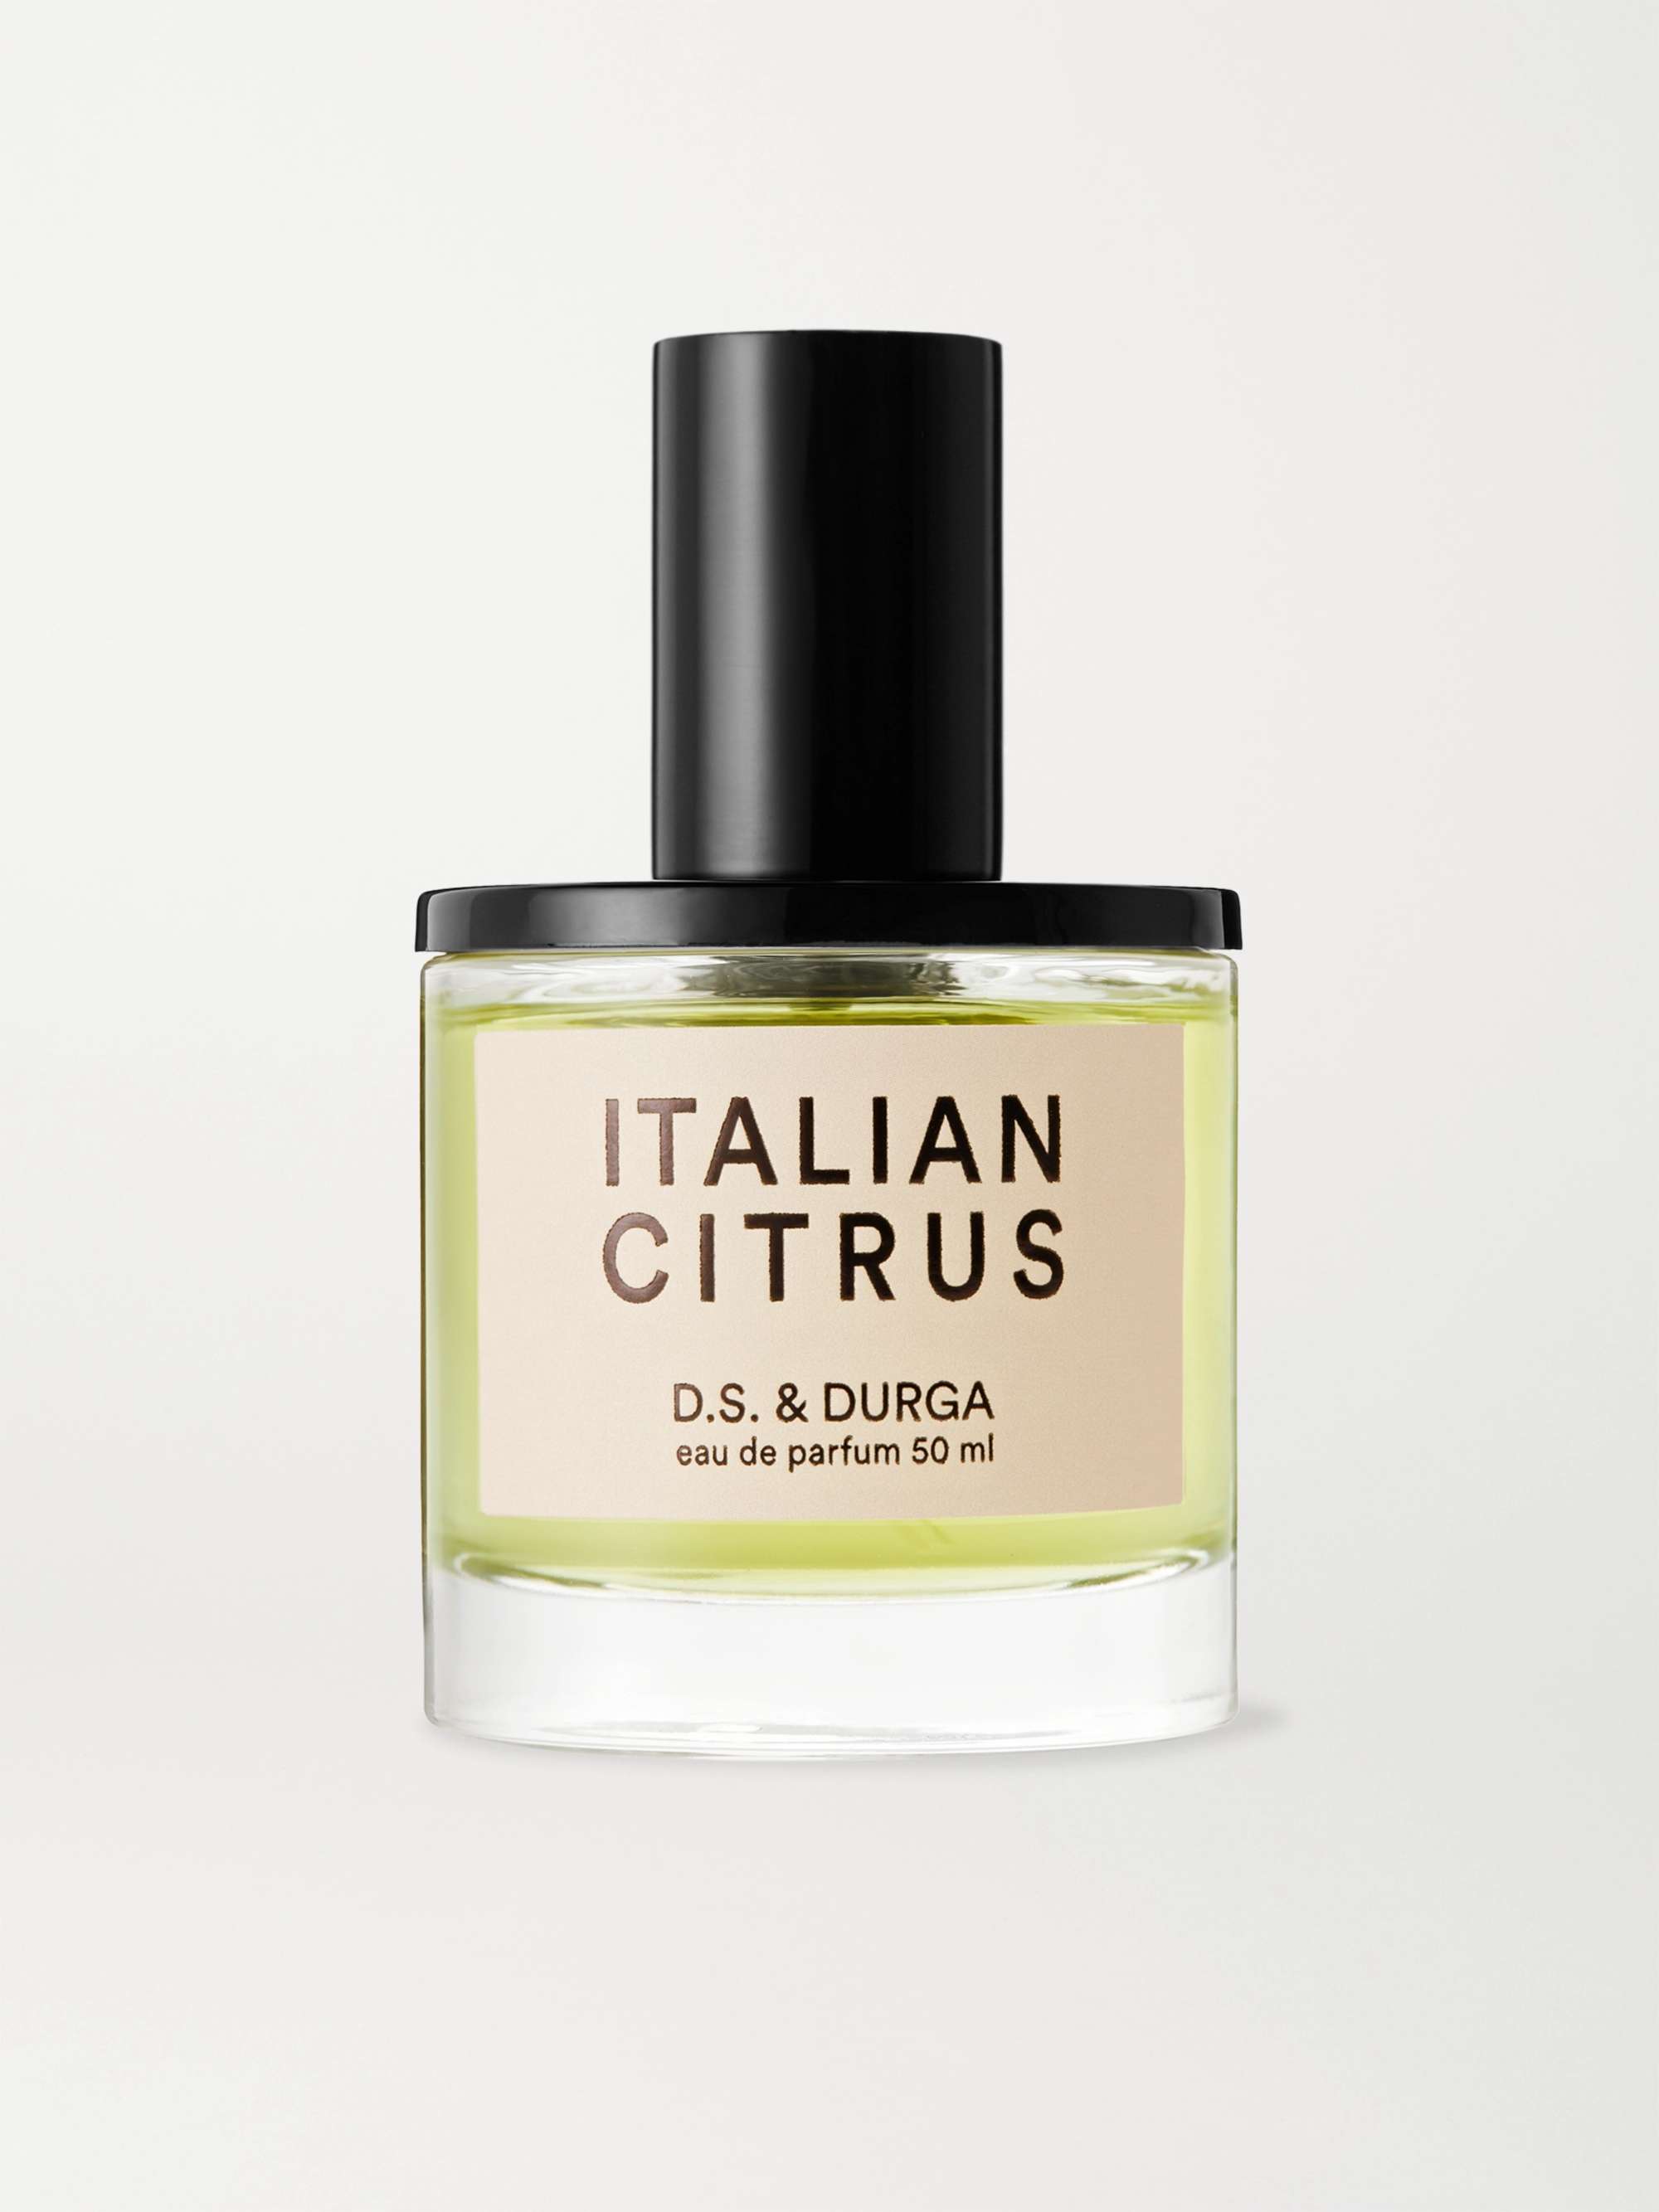 D.S. & DURGA Eau de Parfum - Italian Citrus, 50ml